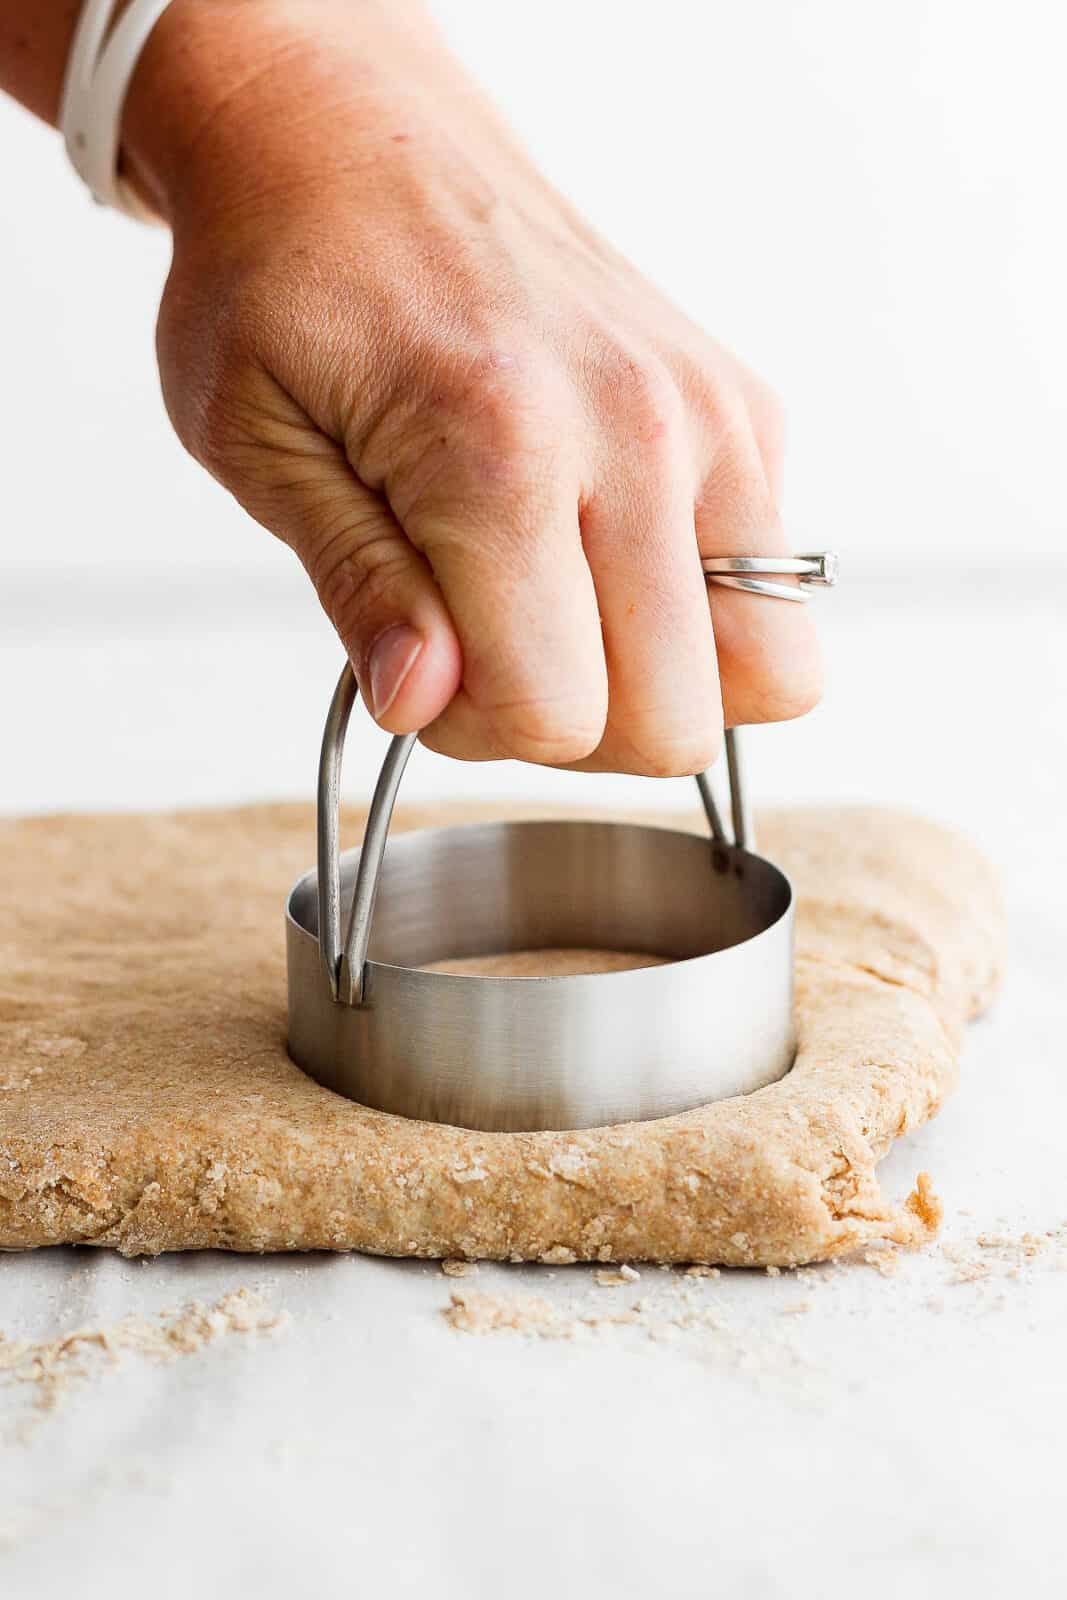 A biscuit cutter cutting the shortcake dough into circles.